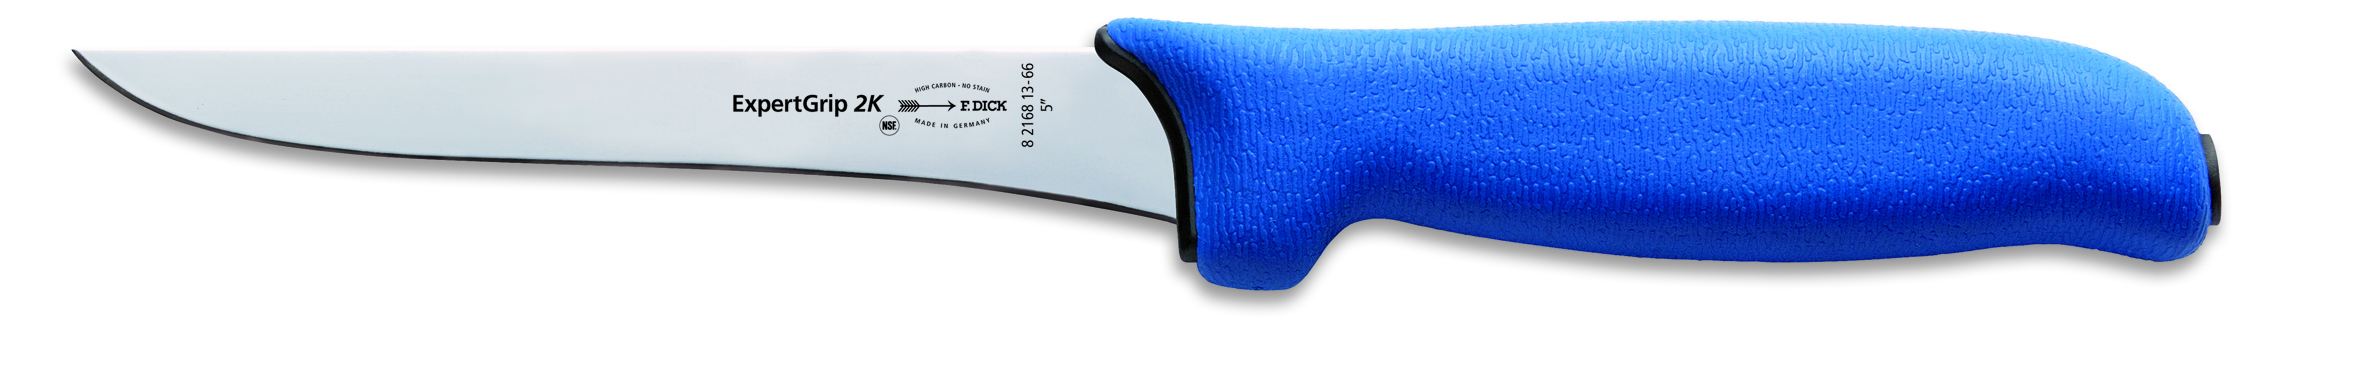 Ausbeinmesser, Dick, 13 cm, ExpertGrip 2K steif gerade blauer Griff, Auslösemesser, Zerwirkmesser, K